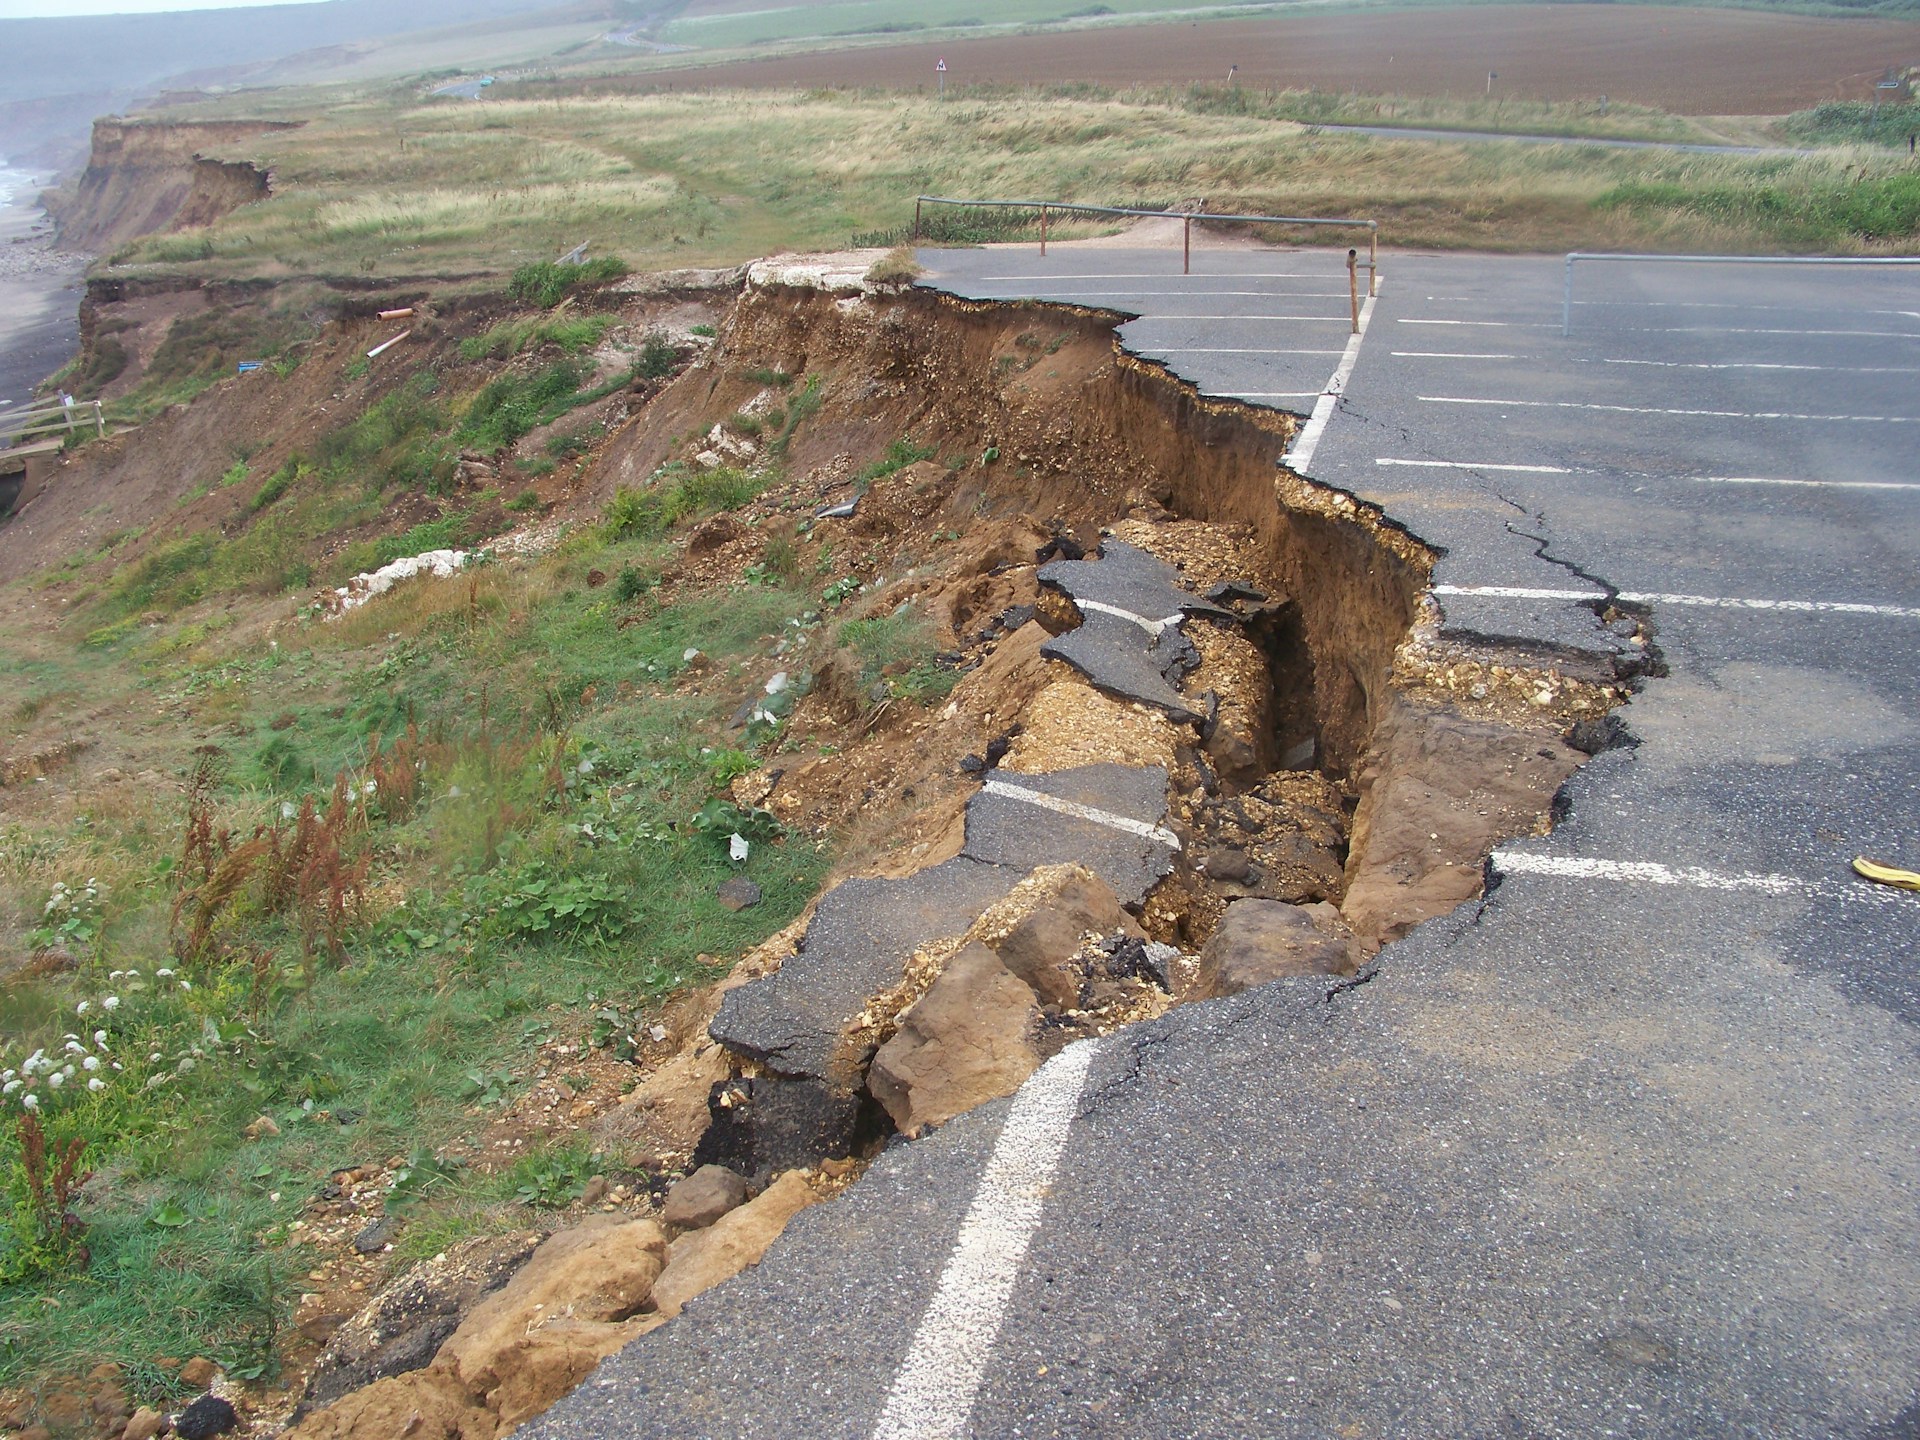 A cracked and broken carpark on a cliff's edge following an earthquake